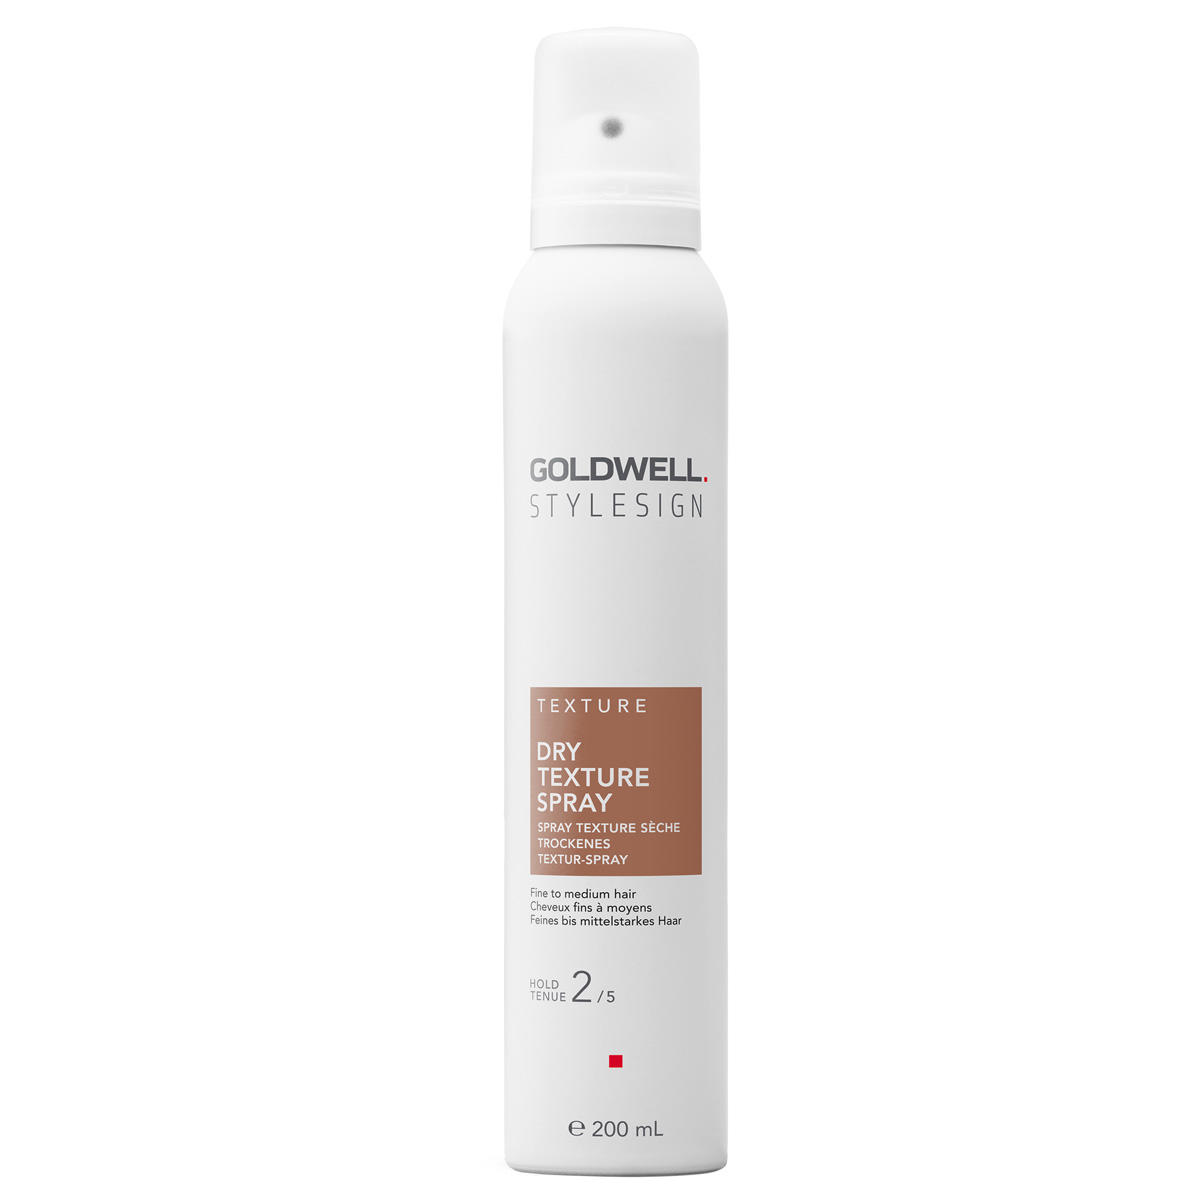 Goldwell StyleSign Texture Dry texture spray 200 ml - 1